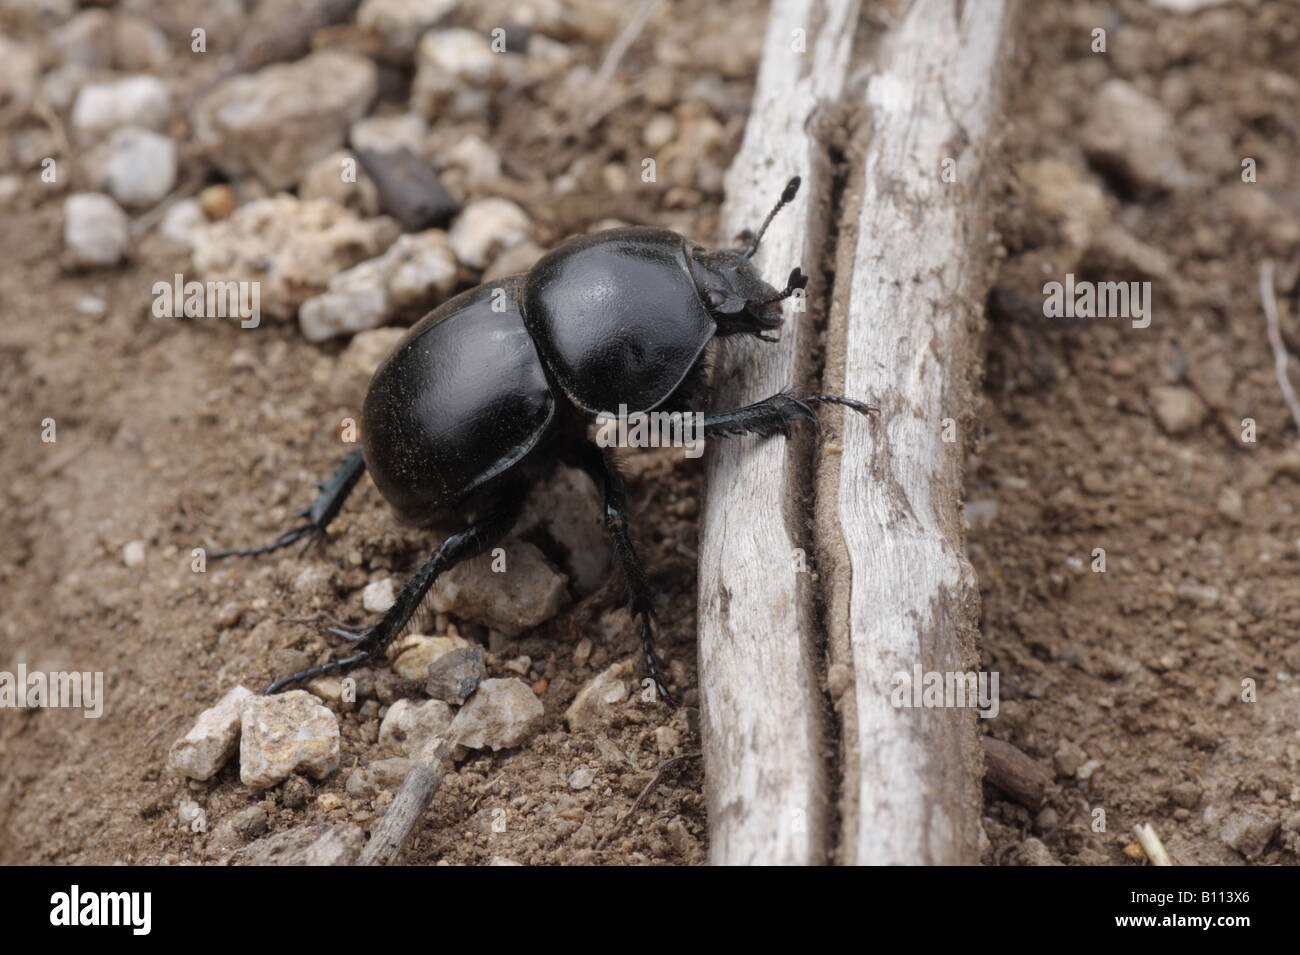 Dor Beetle - Geotrupes species Stock Photo